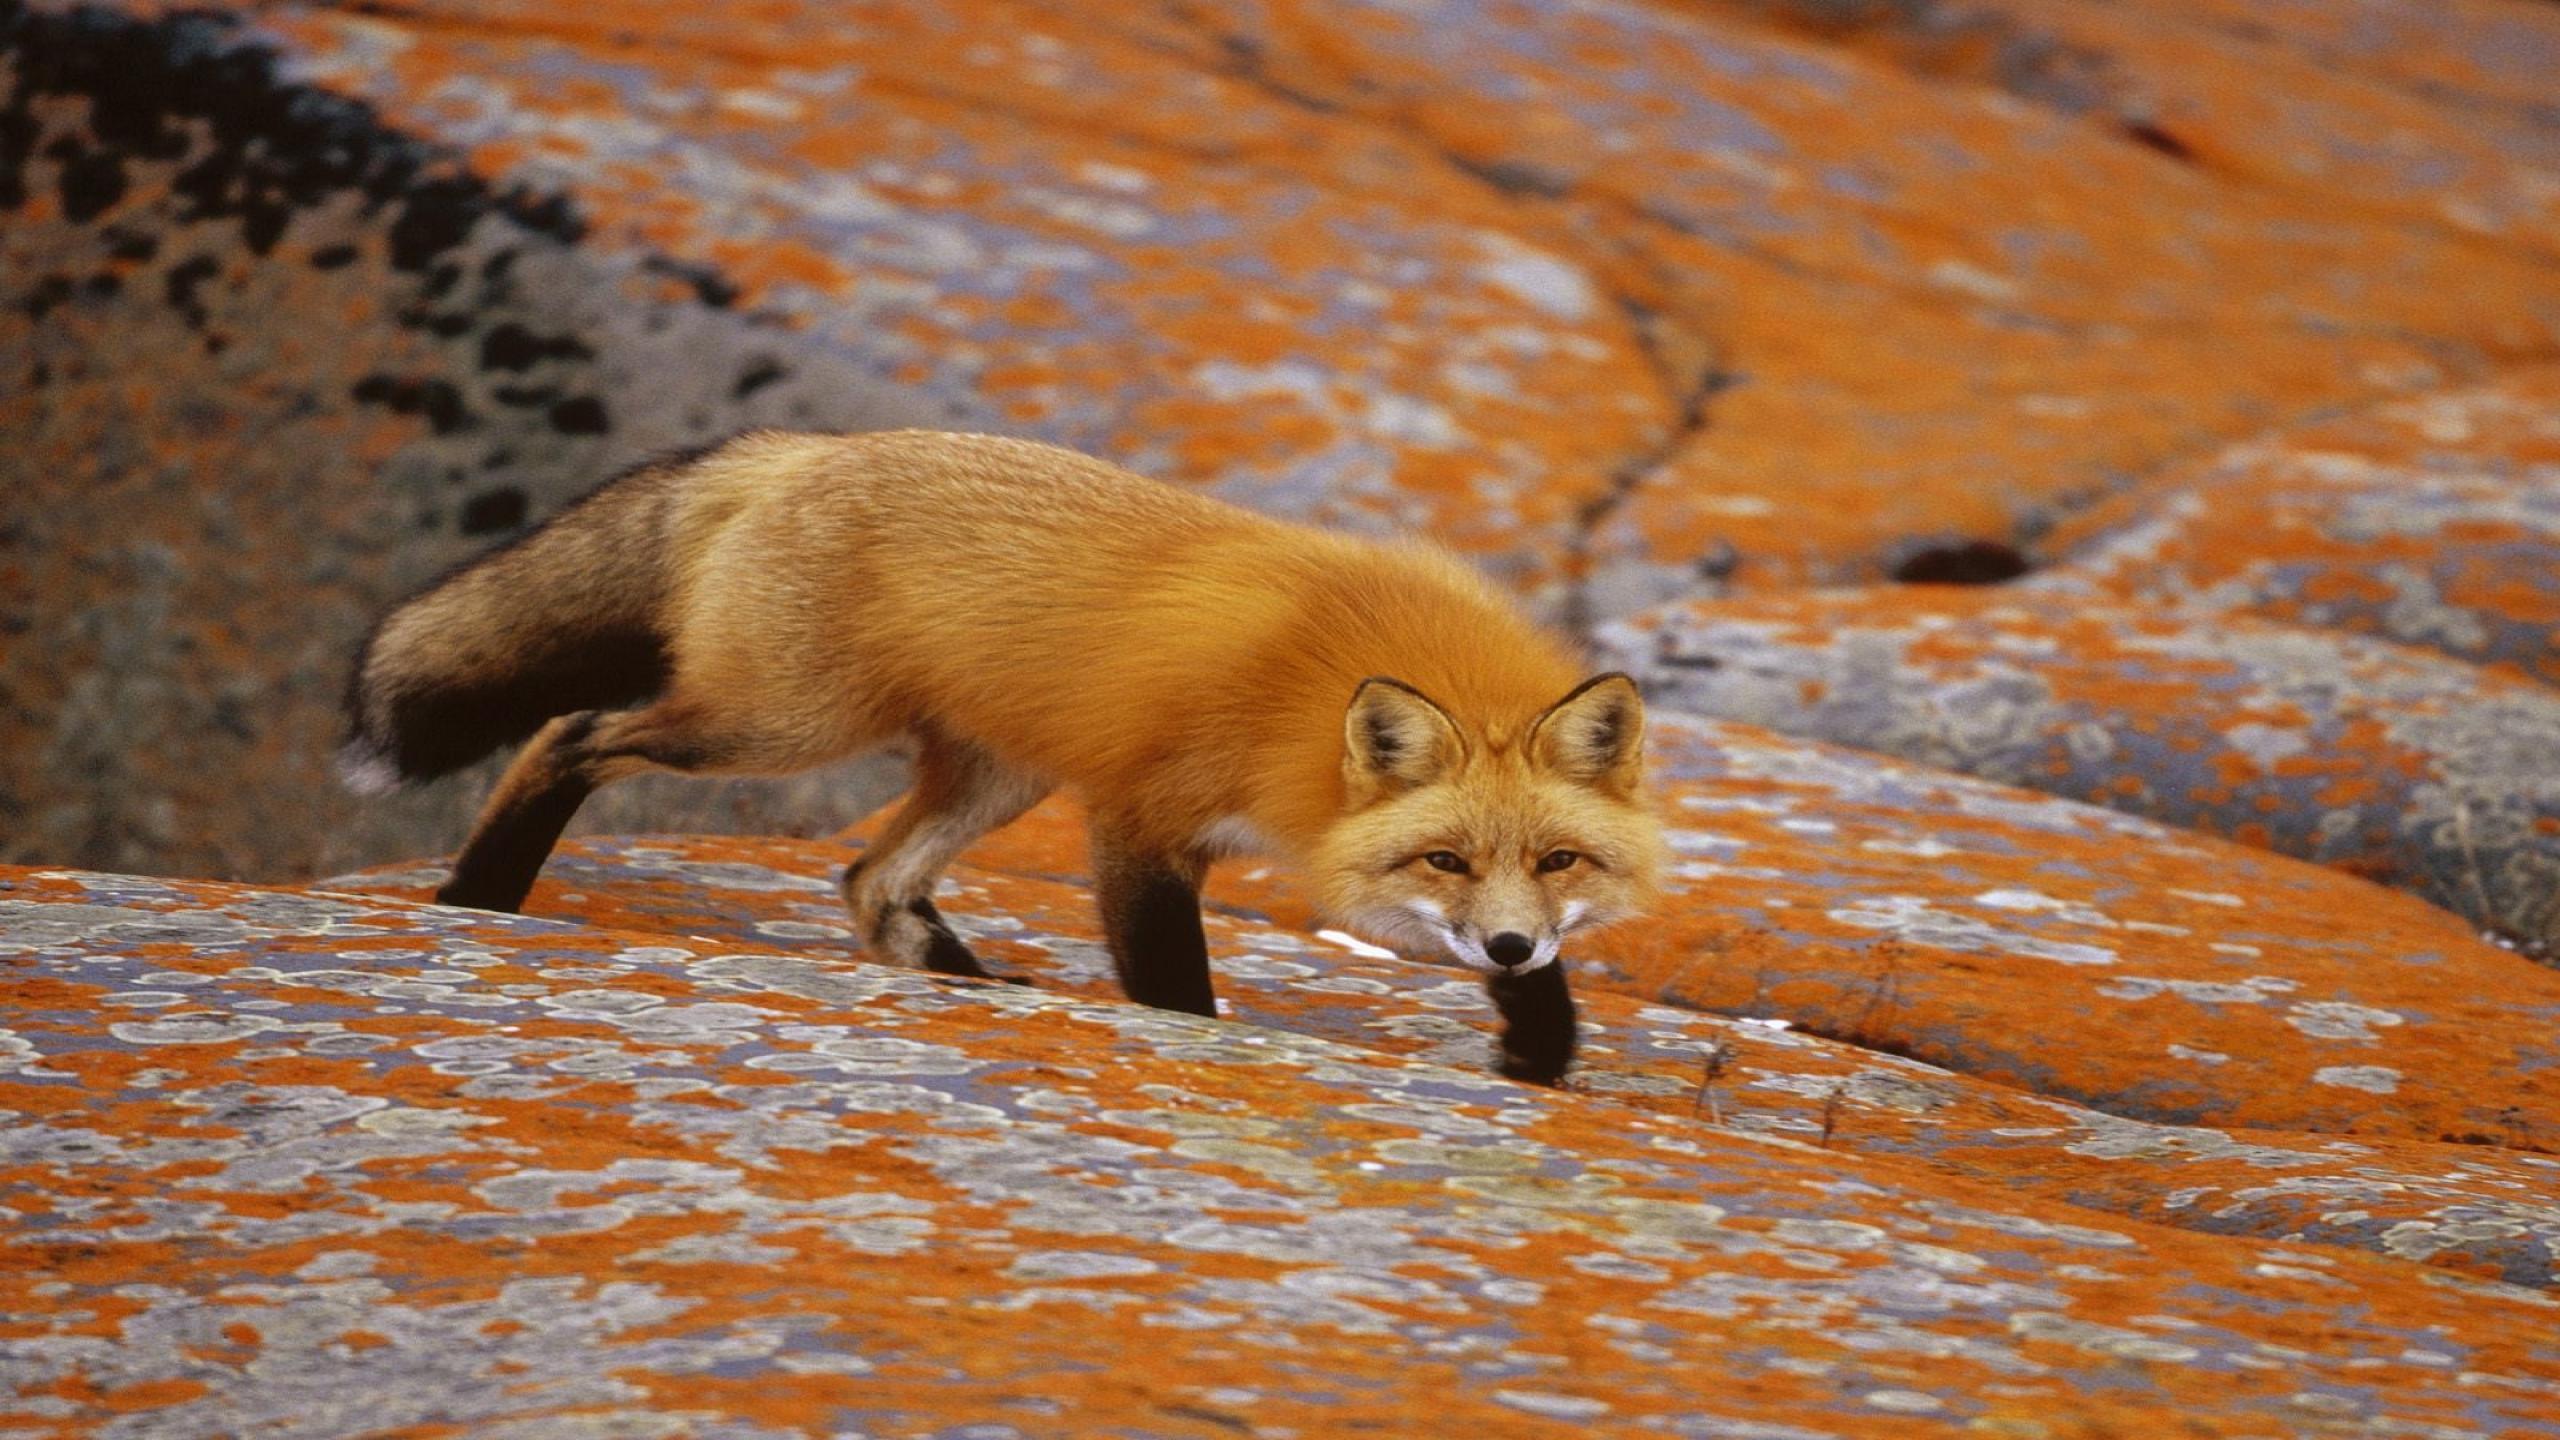 Red fox wallpaper download